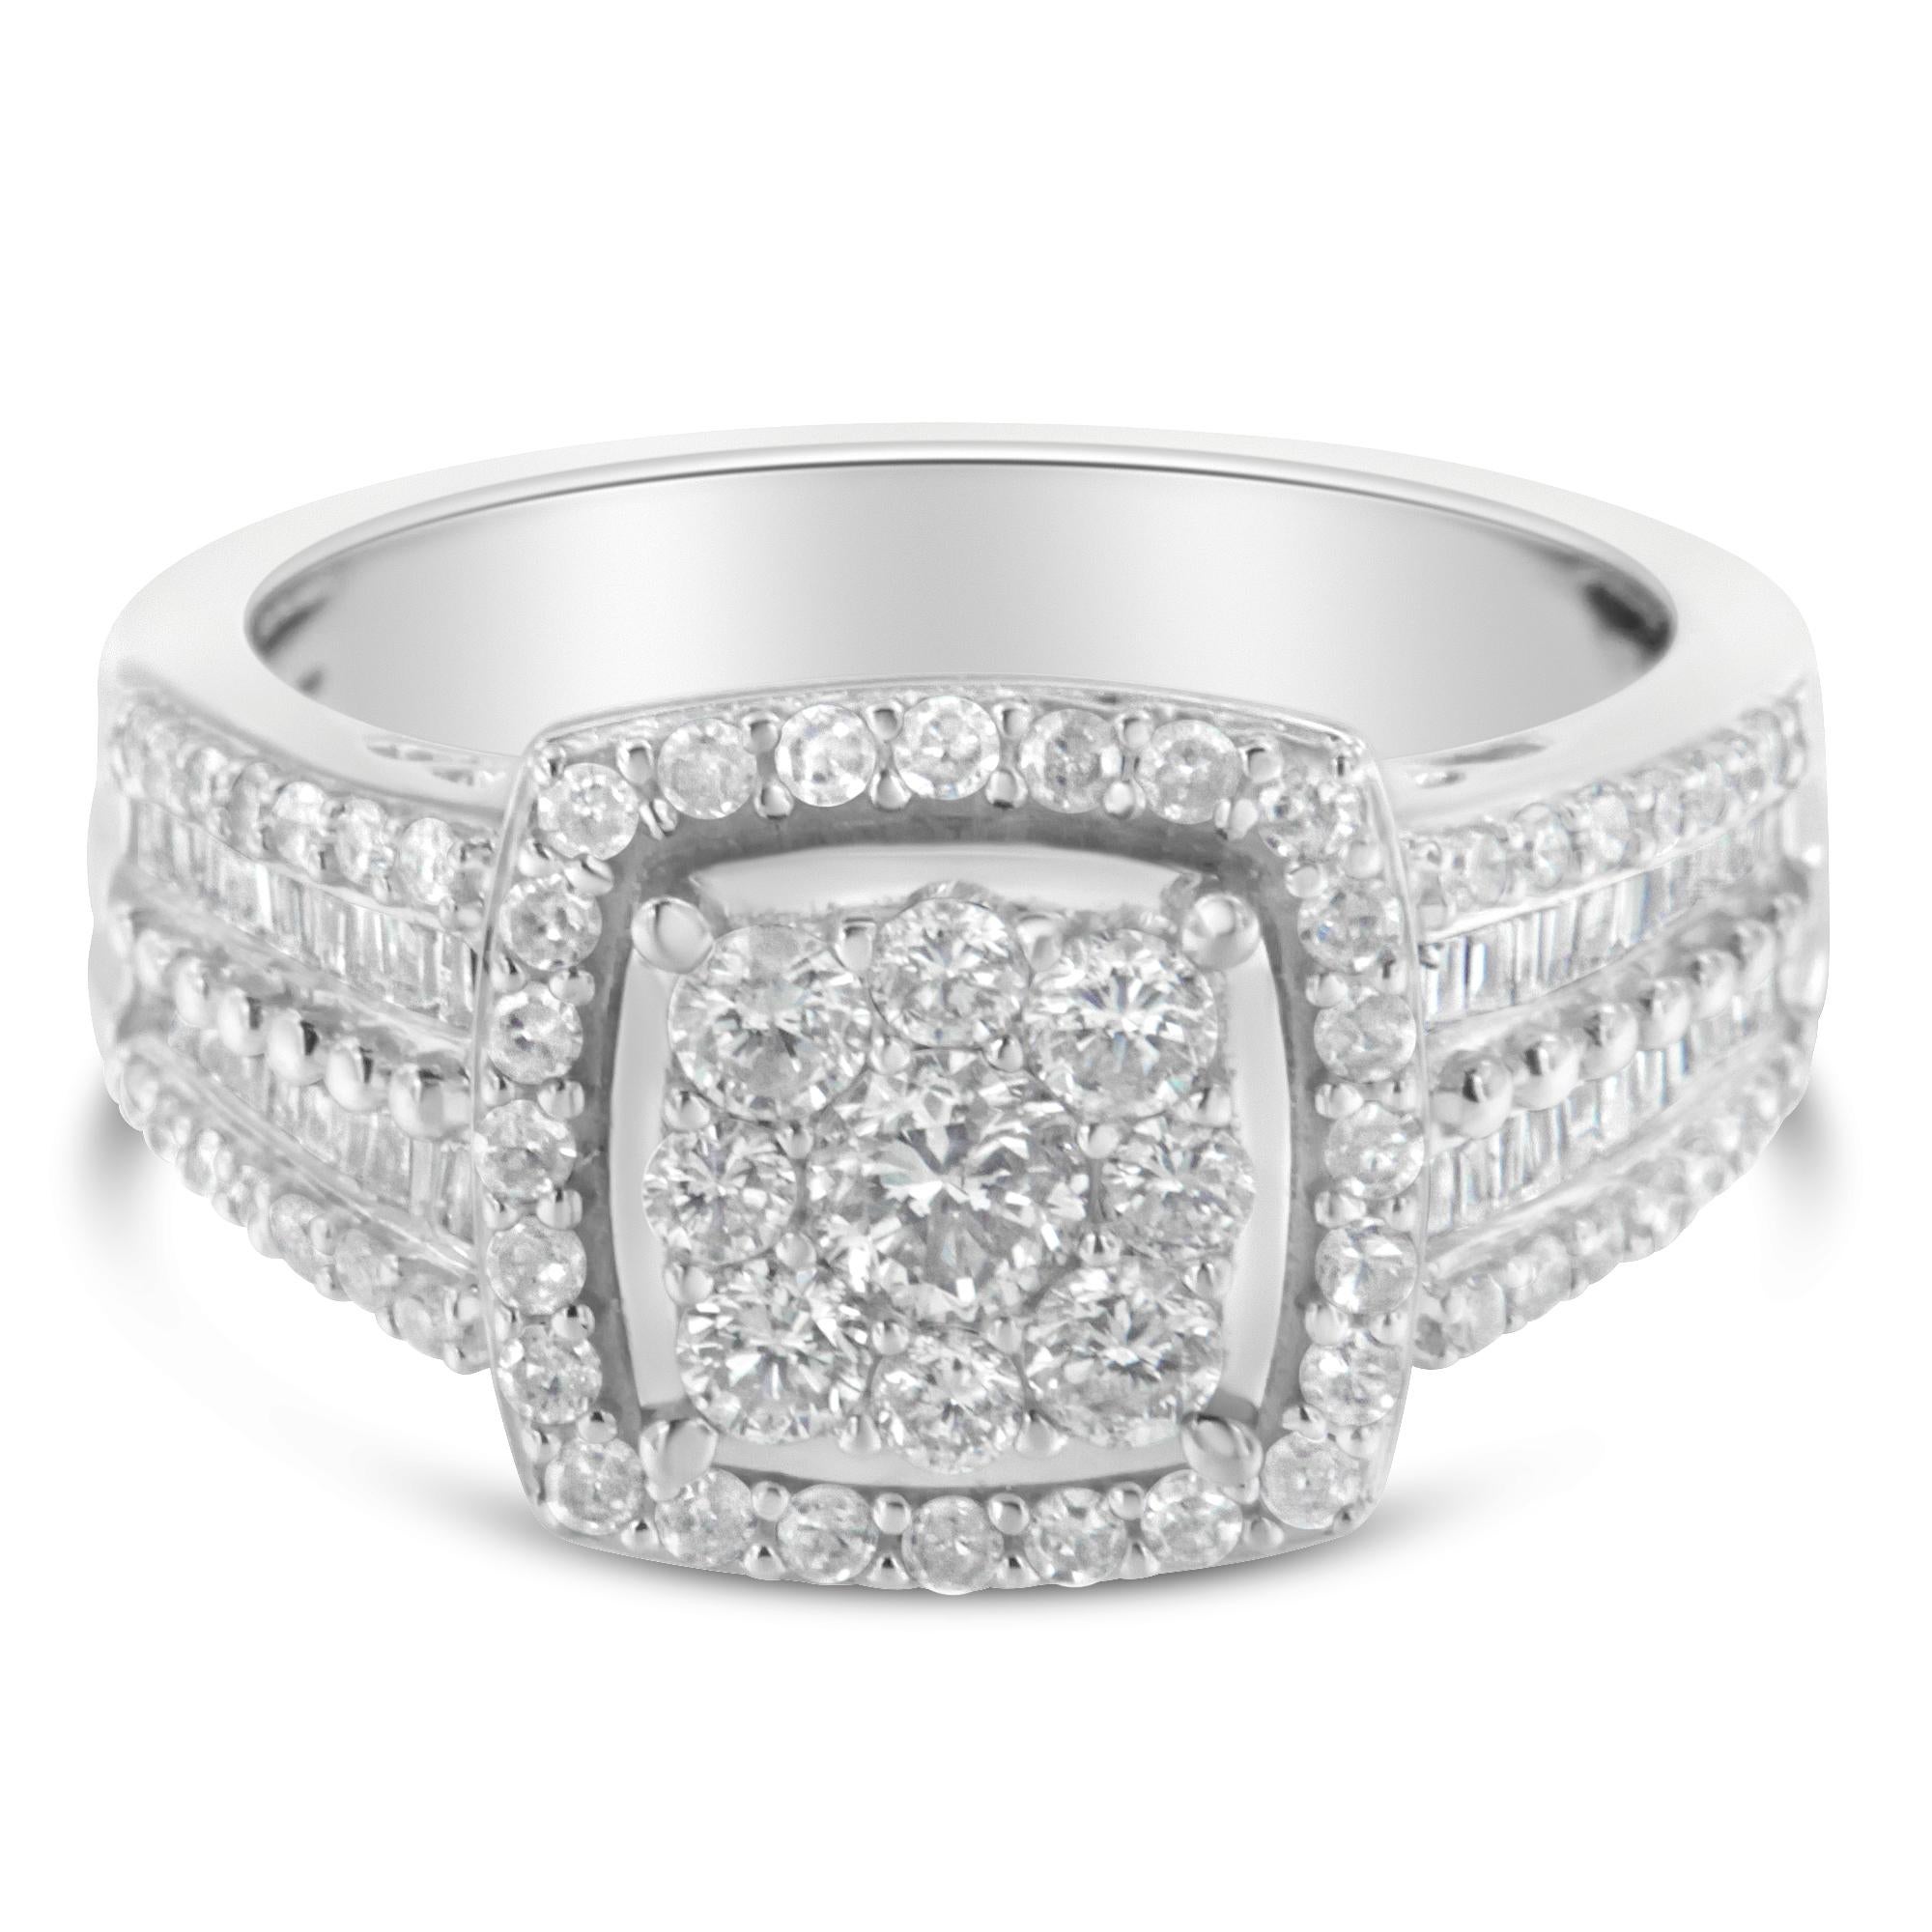 For Sale:  10K White Gold 1.00 Carat Diamond Cluster Ring 5